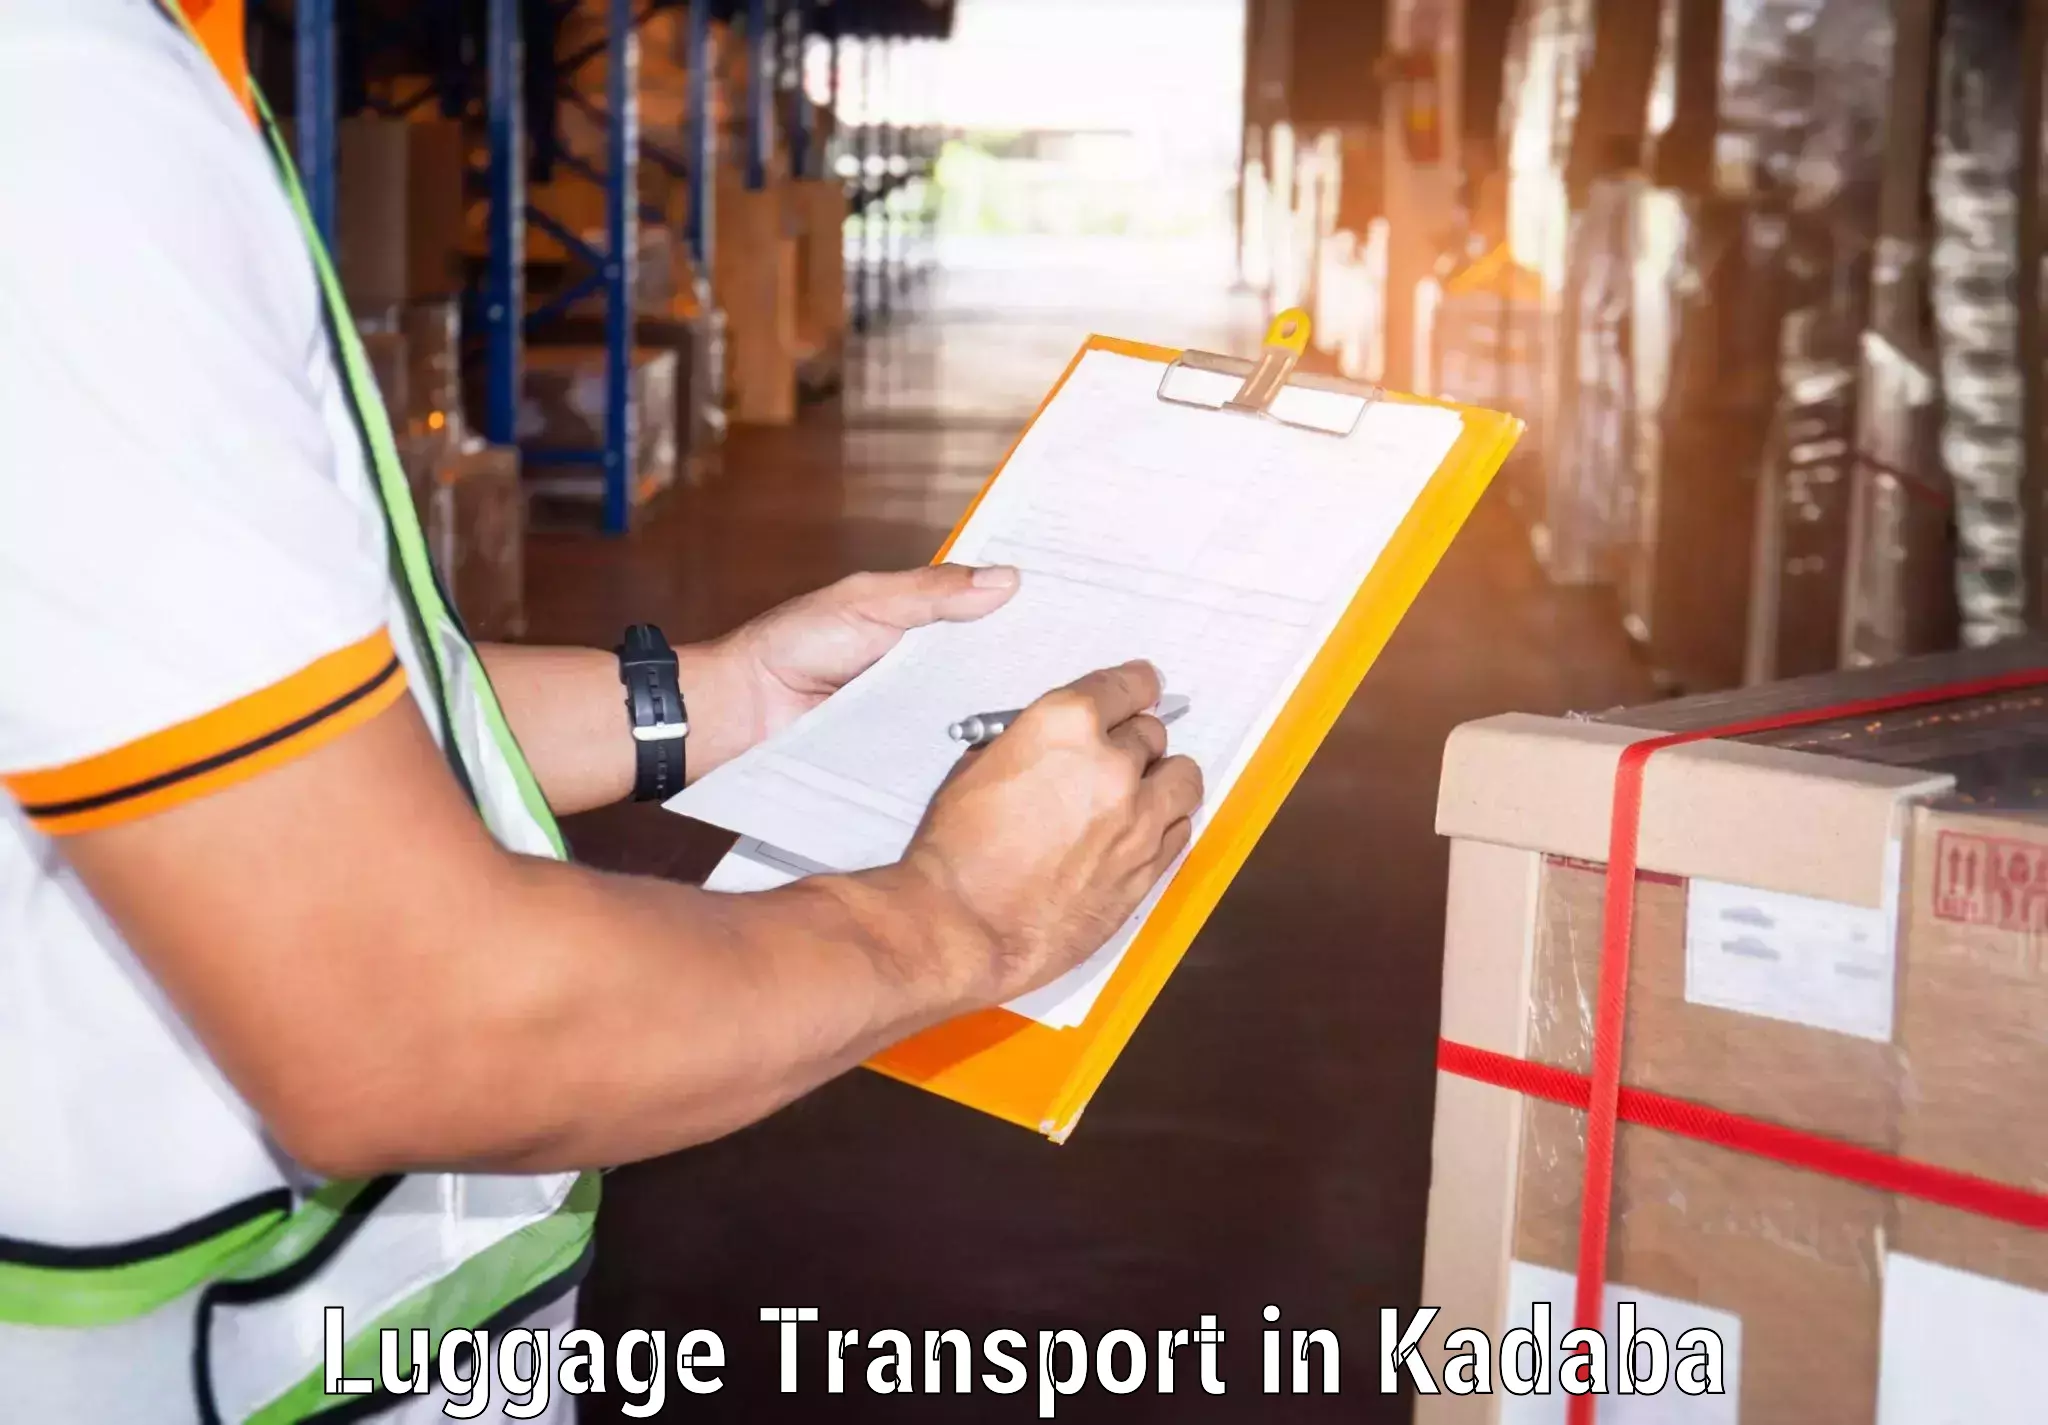 Luggage transit service in Kadaba